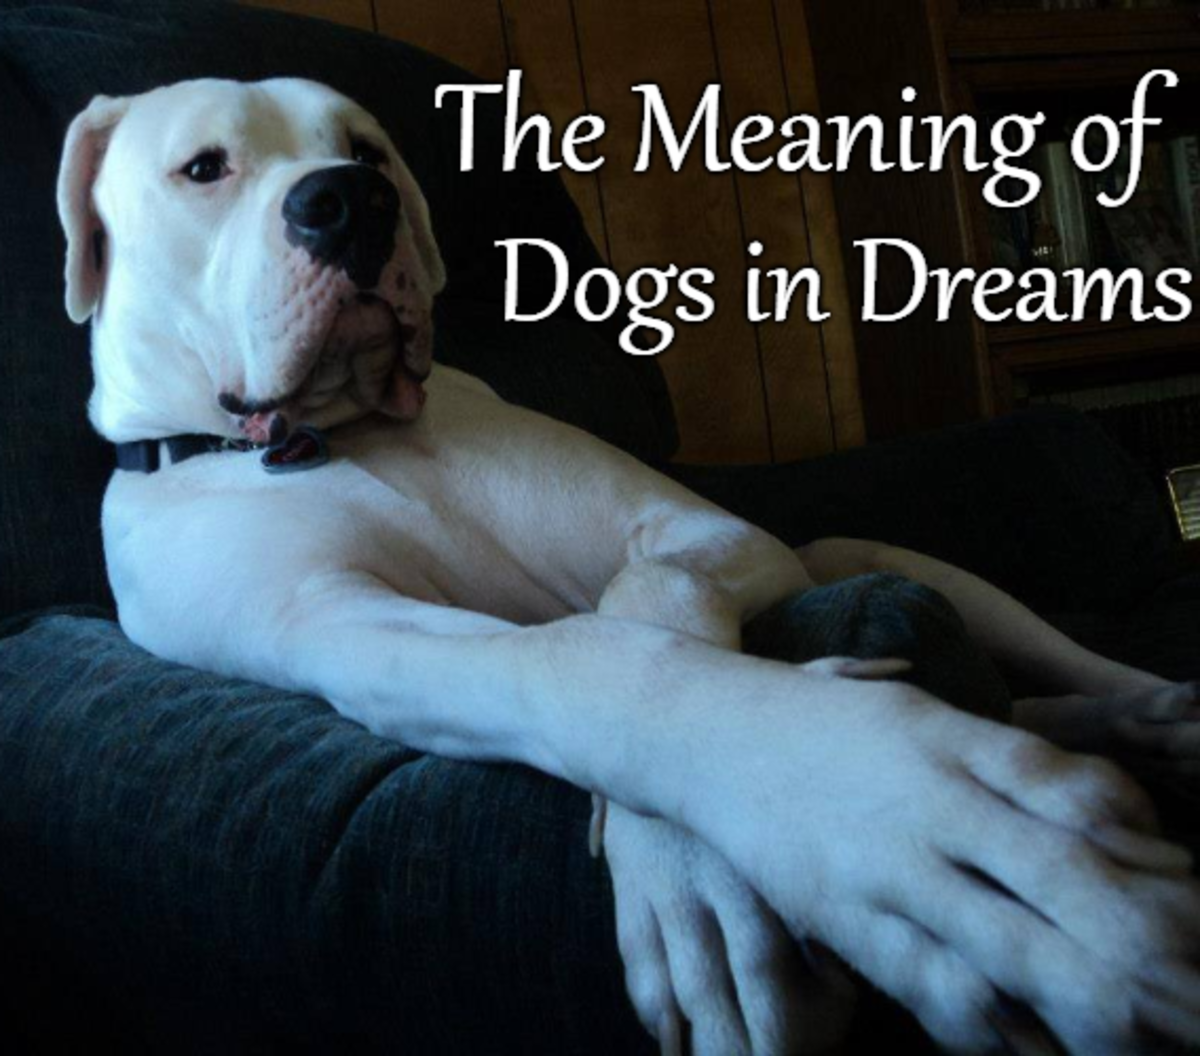  Unelma koiran pelastamisesta (Fortunate Interpretation)